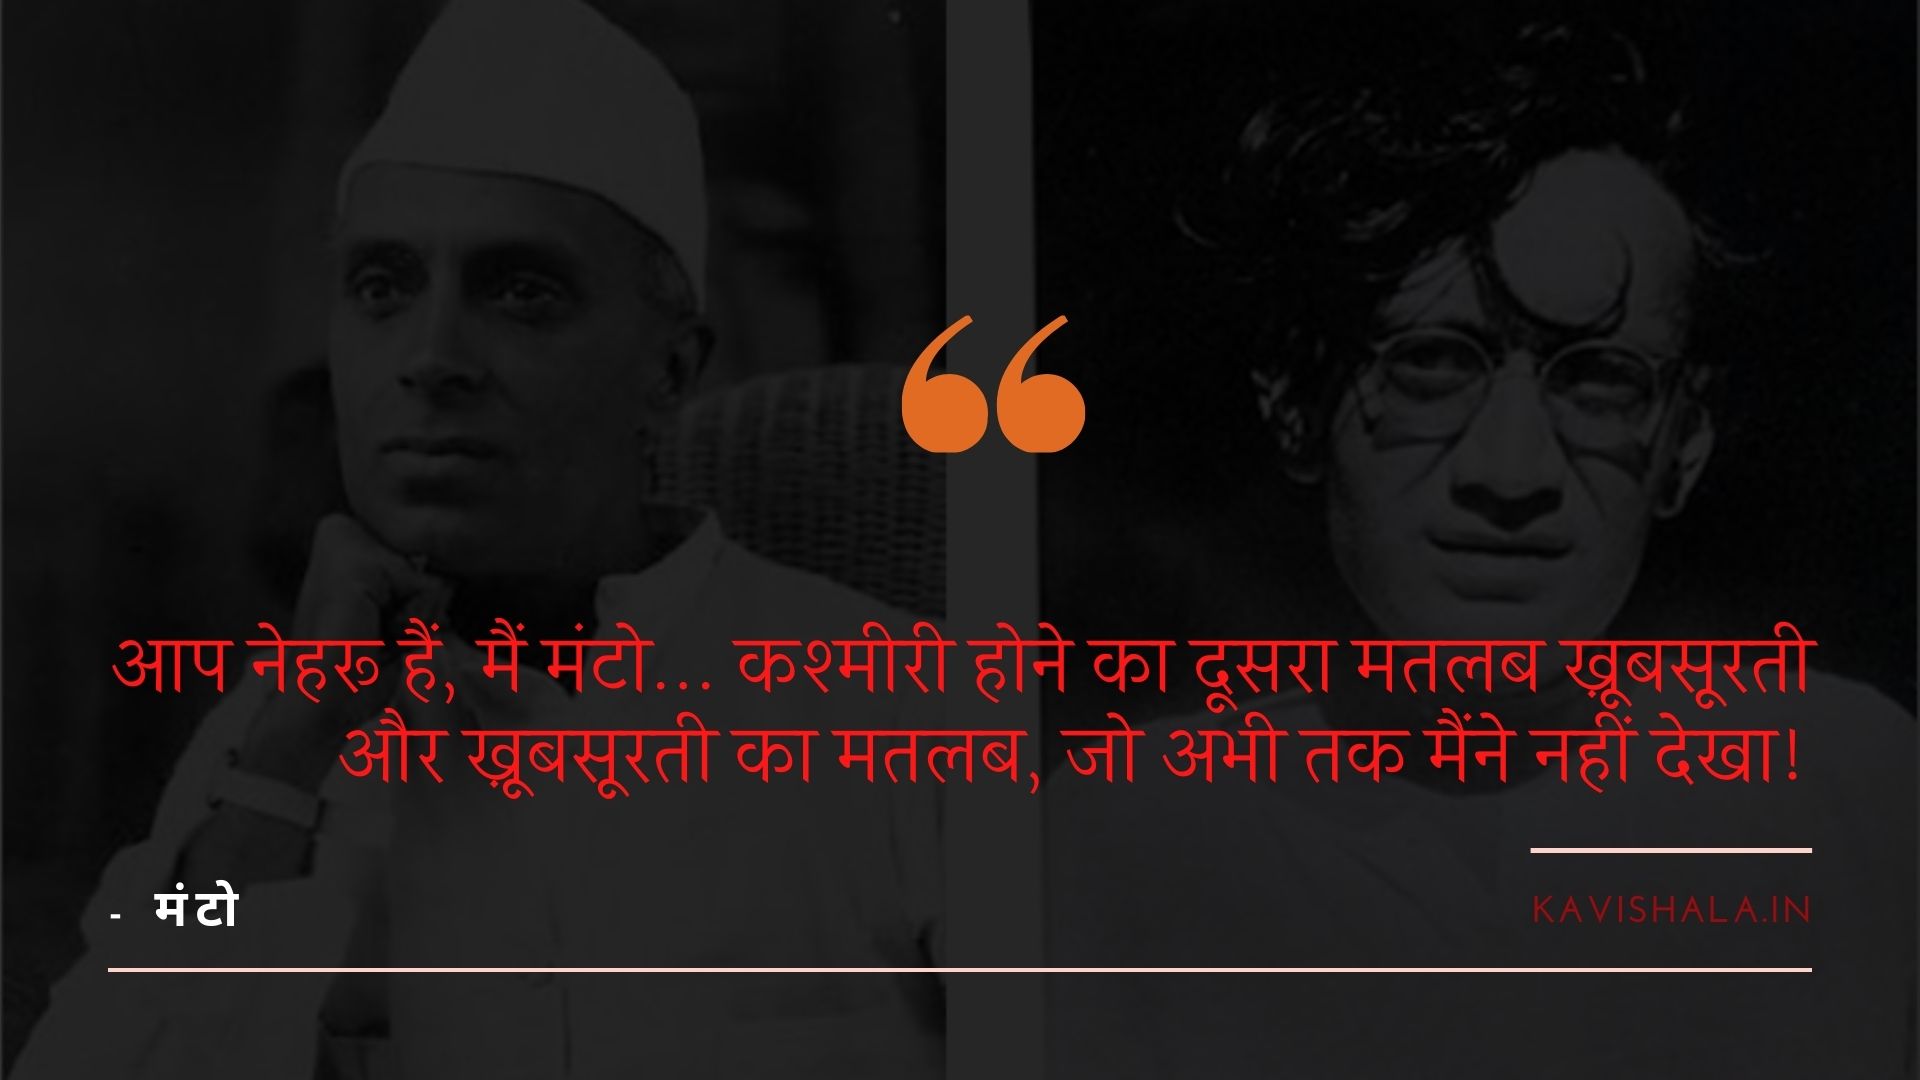 पंडित जवाहरलाल नेहरू के नाम सआदत हसन मंटो का ख़त | नेहरू हीरो या खलनायक?'s image